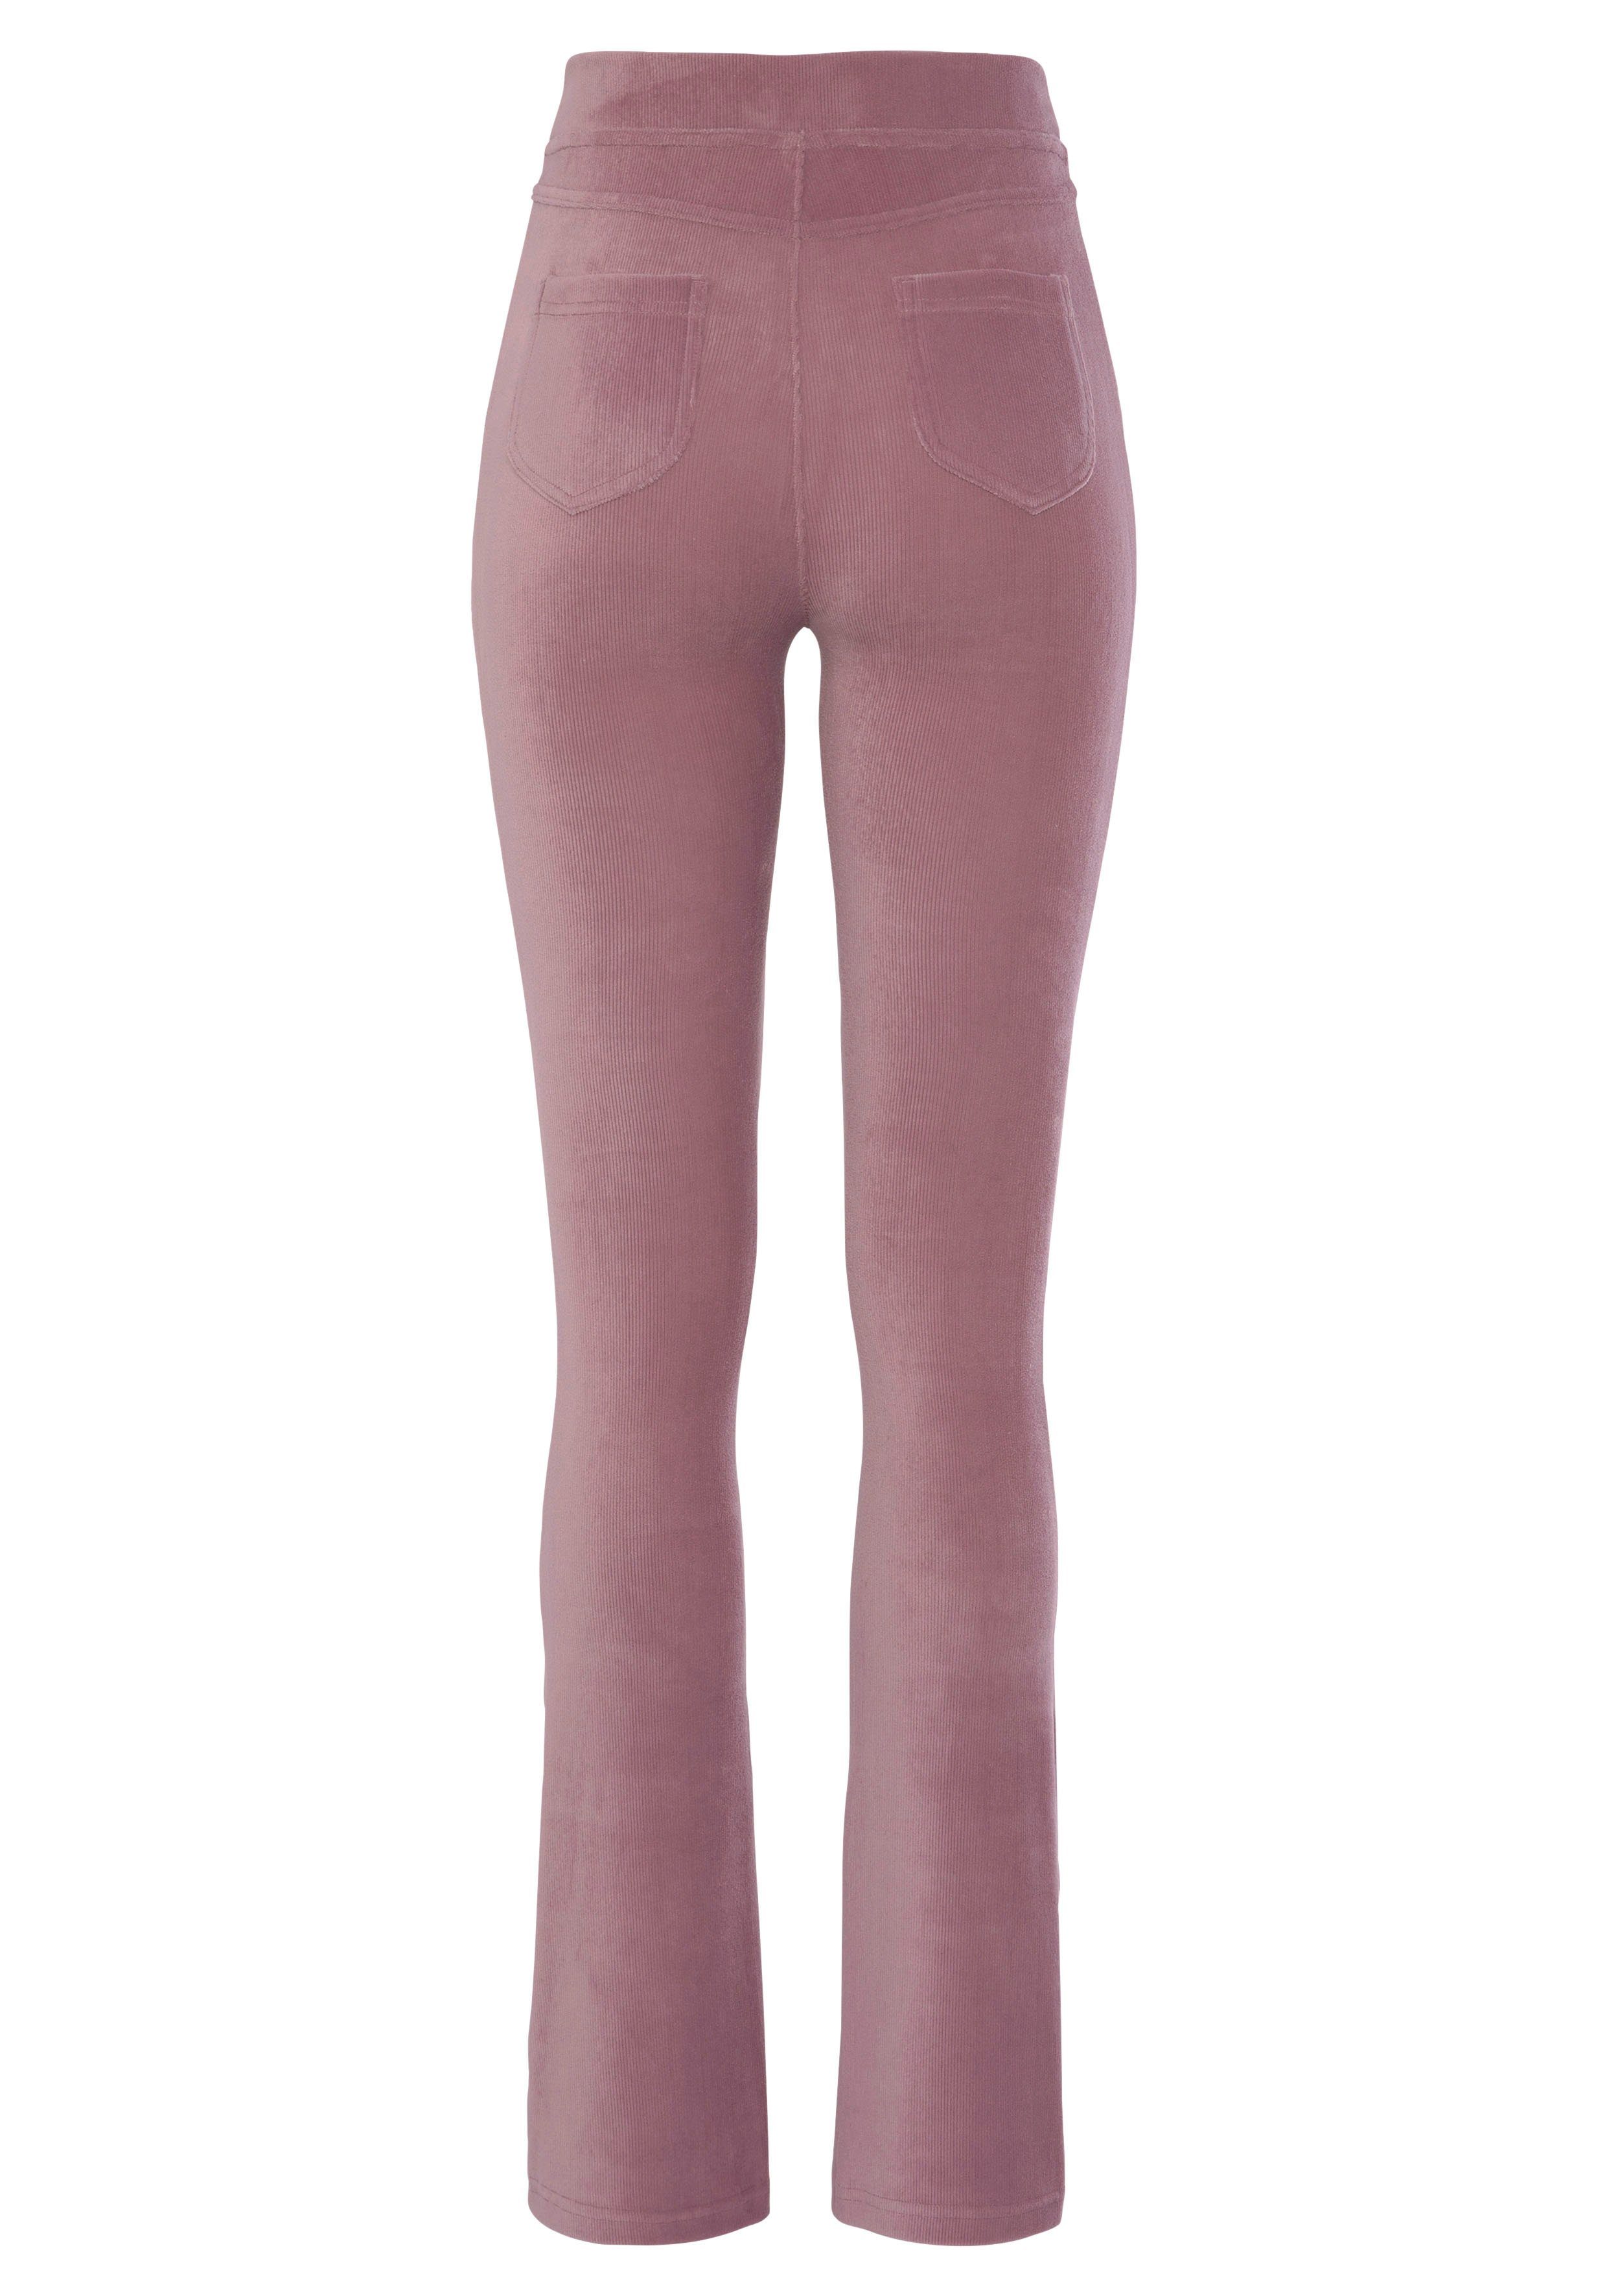 LASCANA Jazzpants Cord-Optik, rosa Loungewear Material weichem in aus